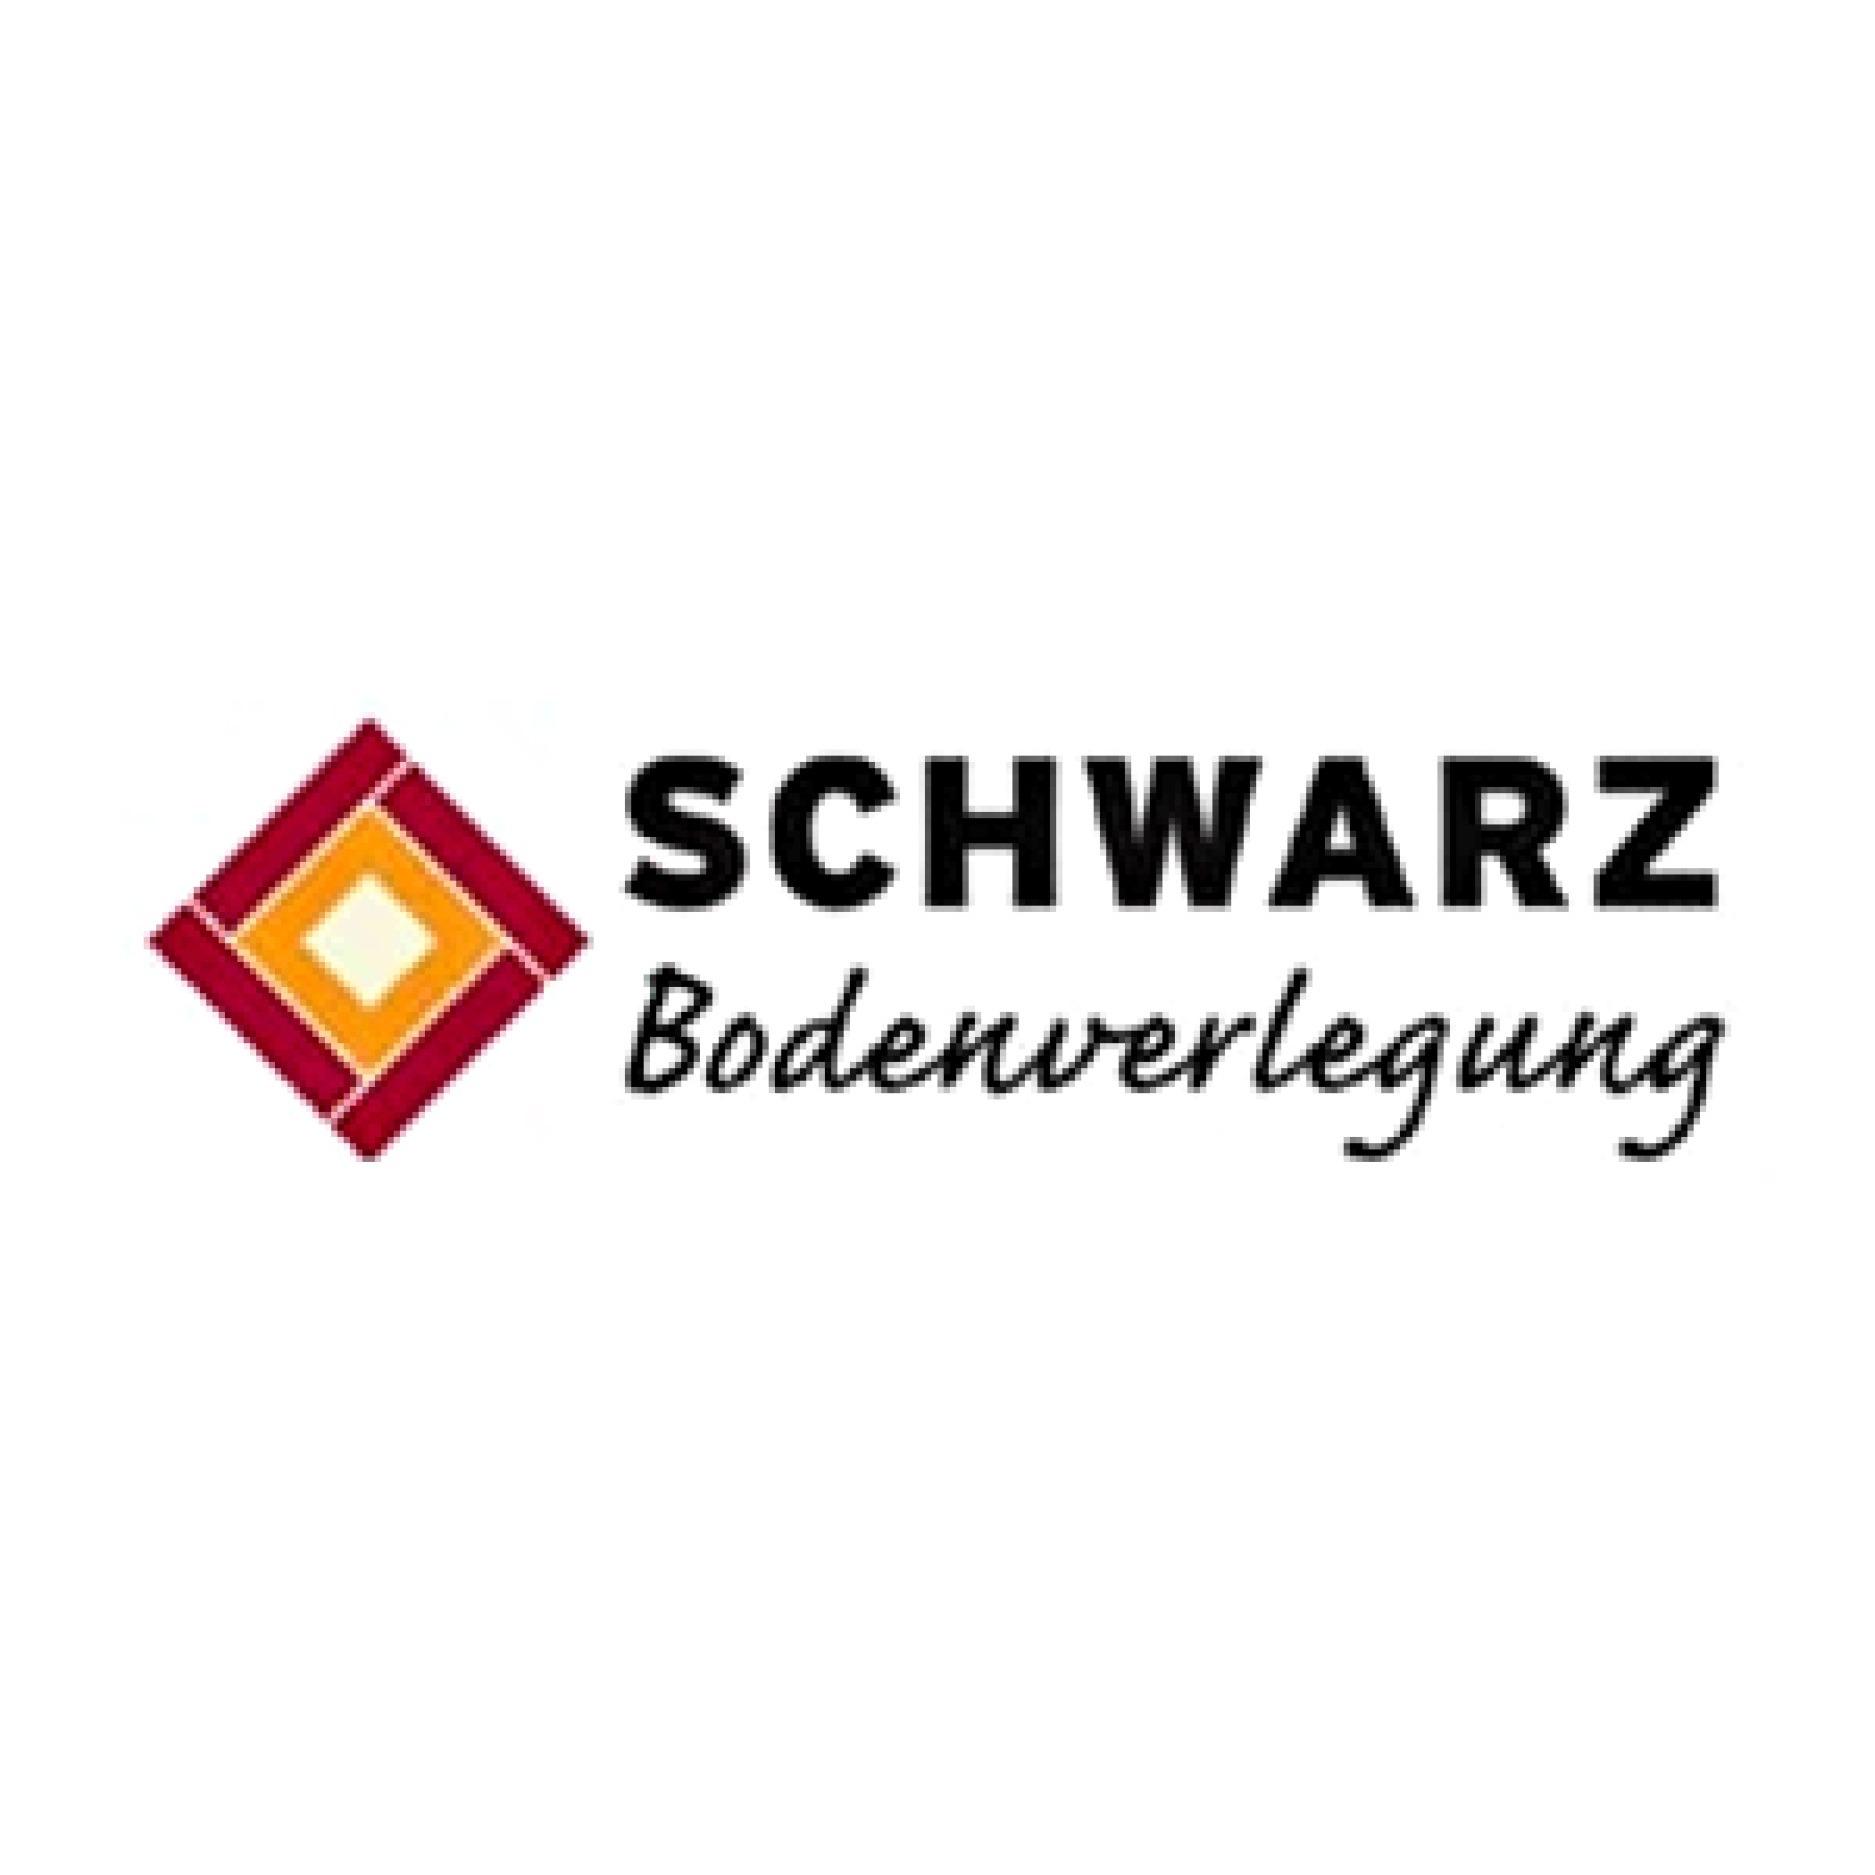 Schwarz Andre Bodenverlegung Logo